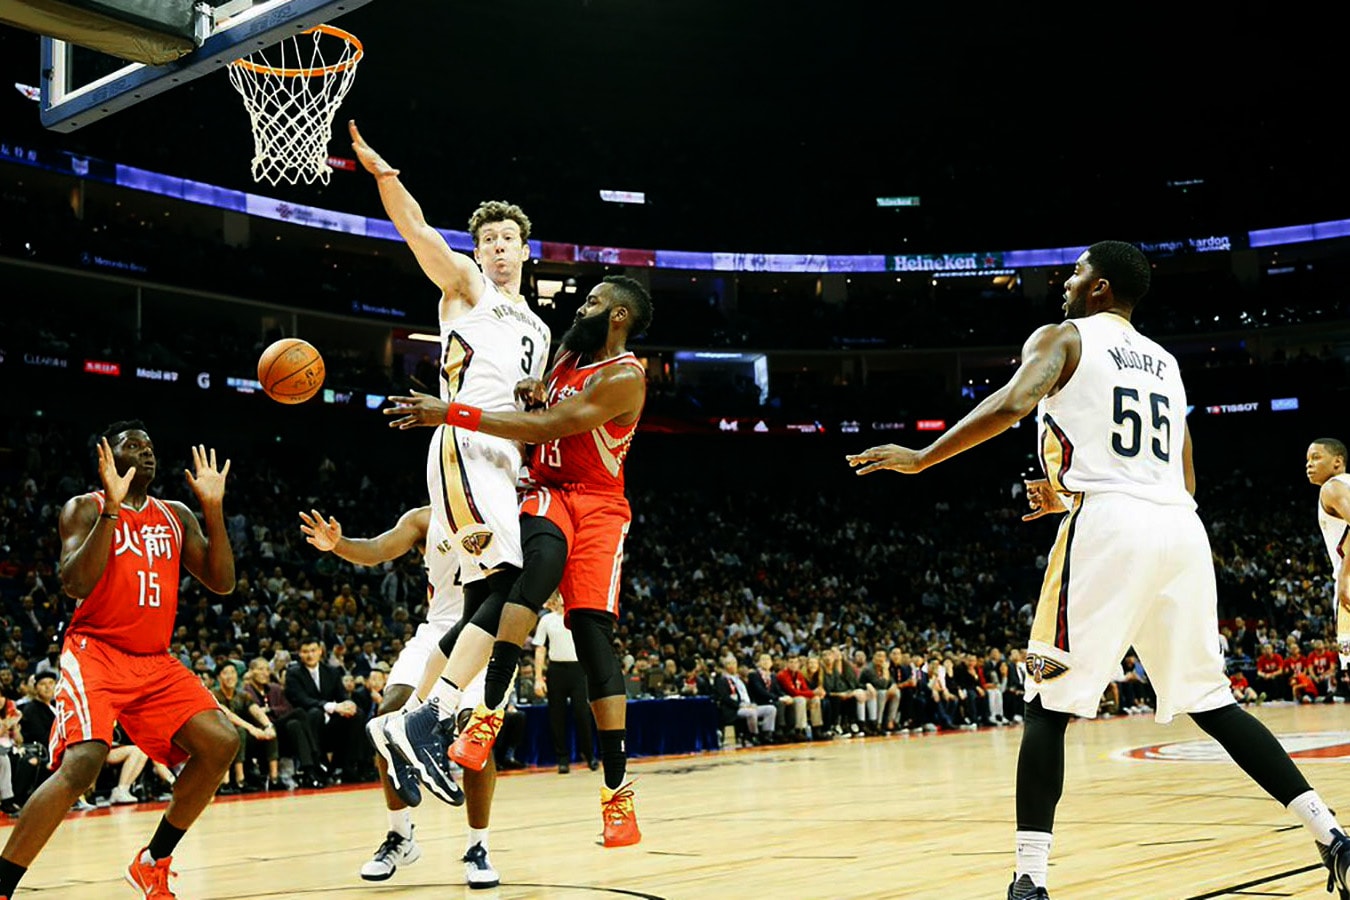 Tissot 與 NBA 合作倒計時顯示板首度亮相 NBA 中國賽